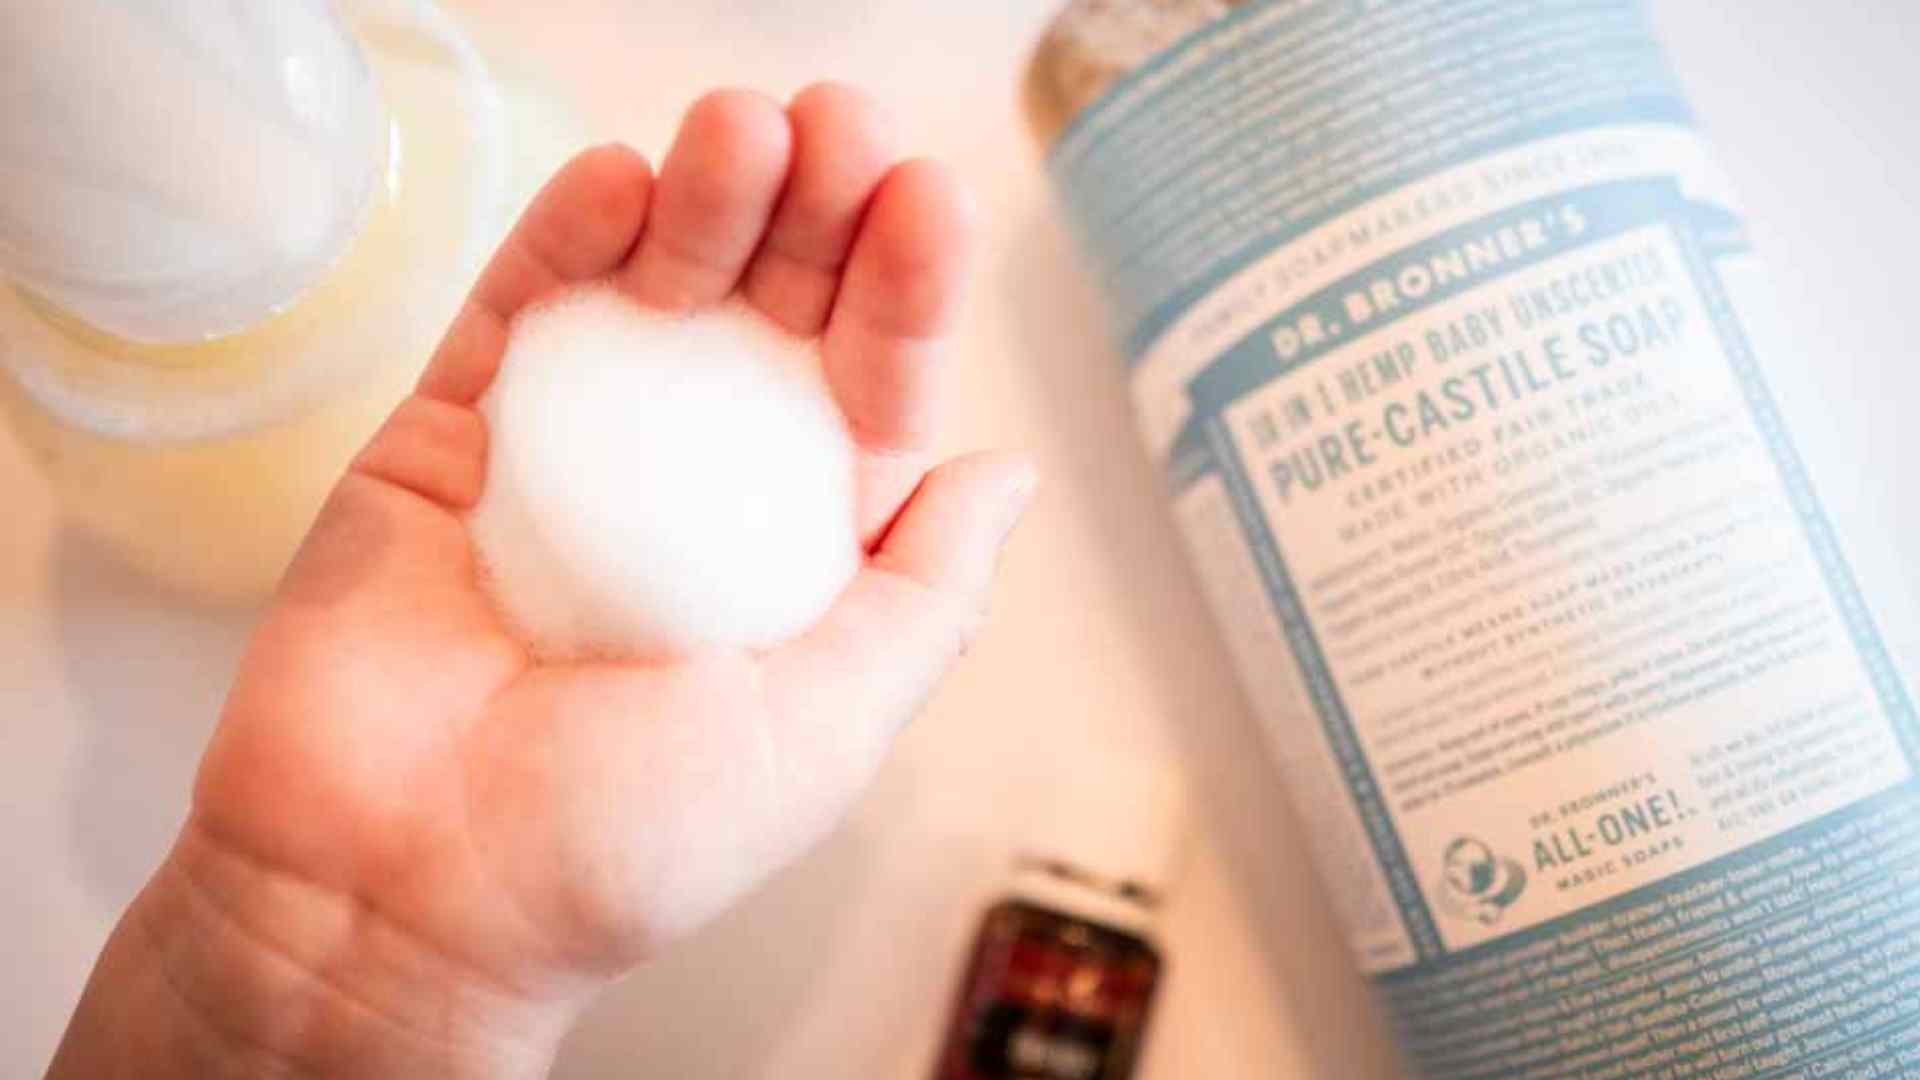 DIY Thieves Foaming Hand Soap